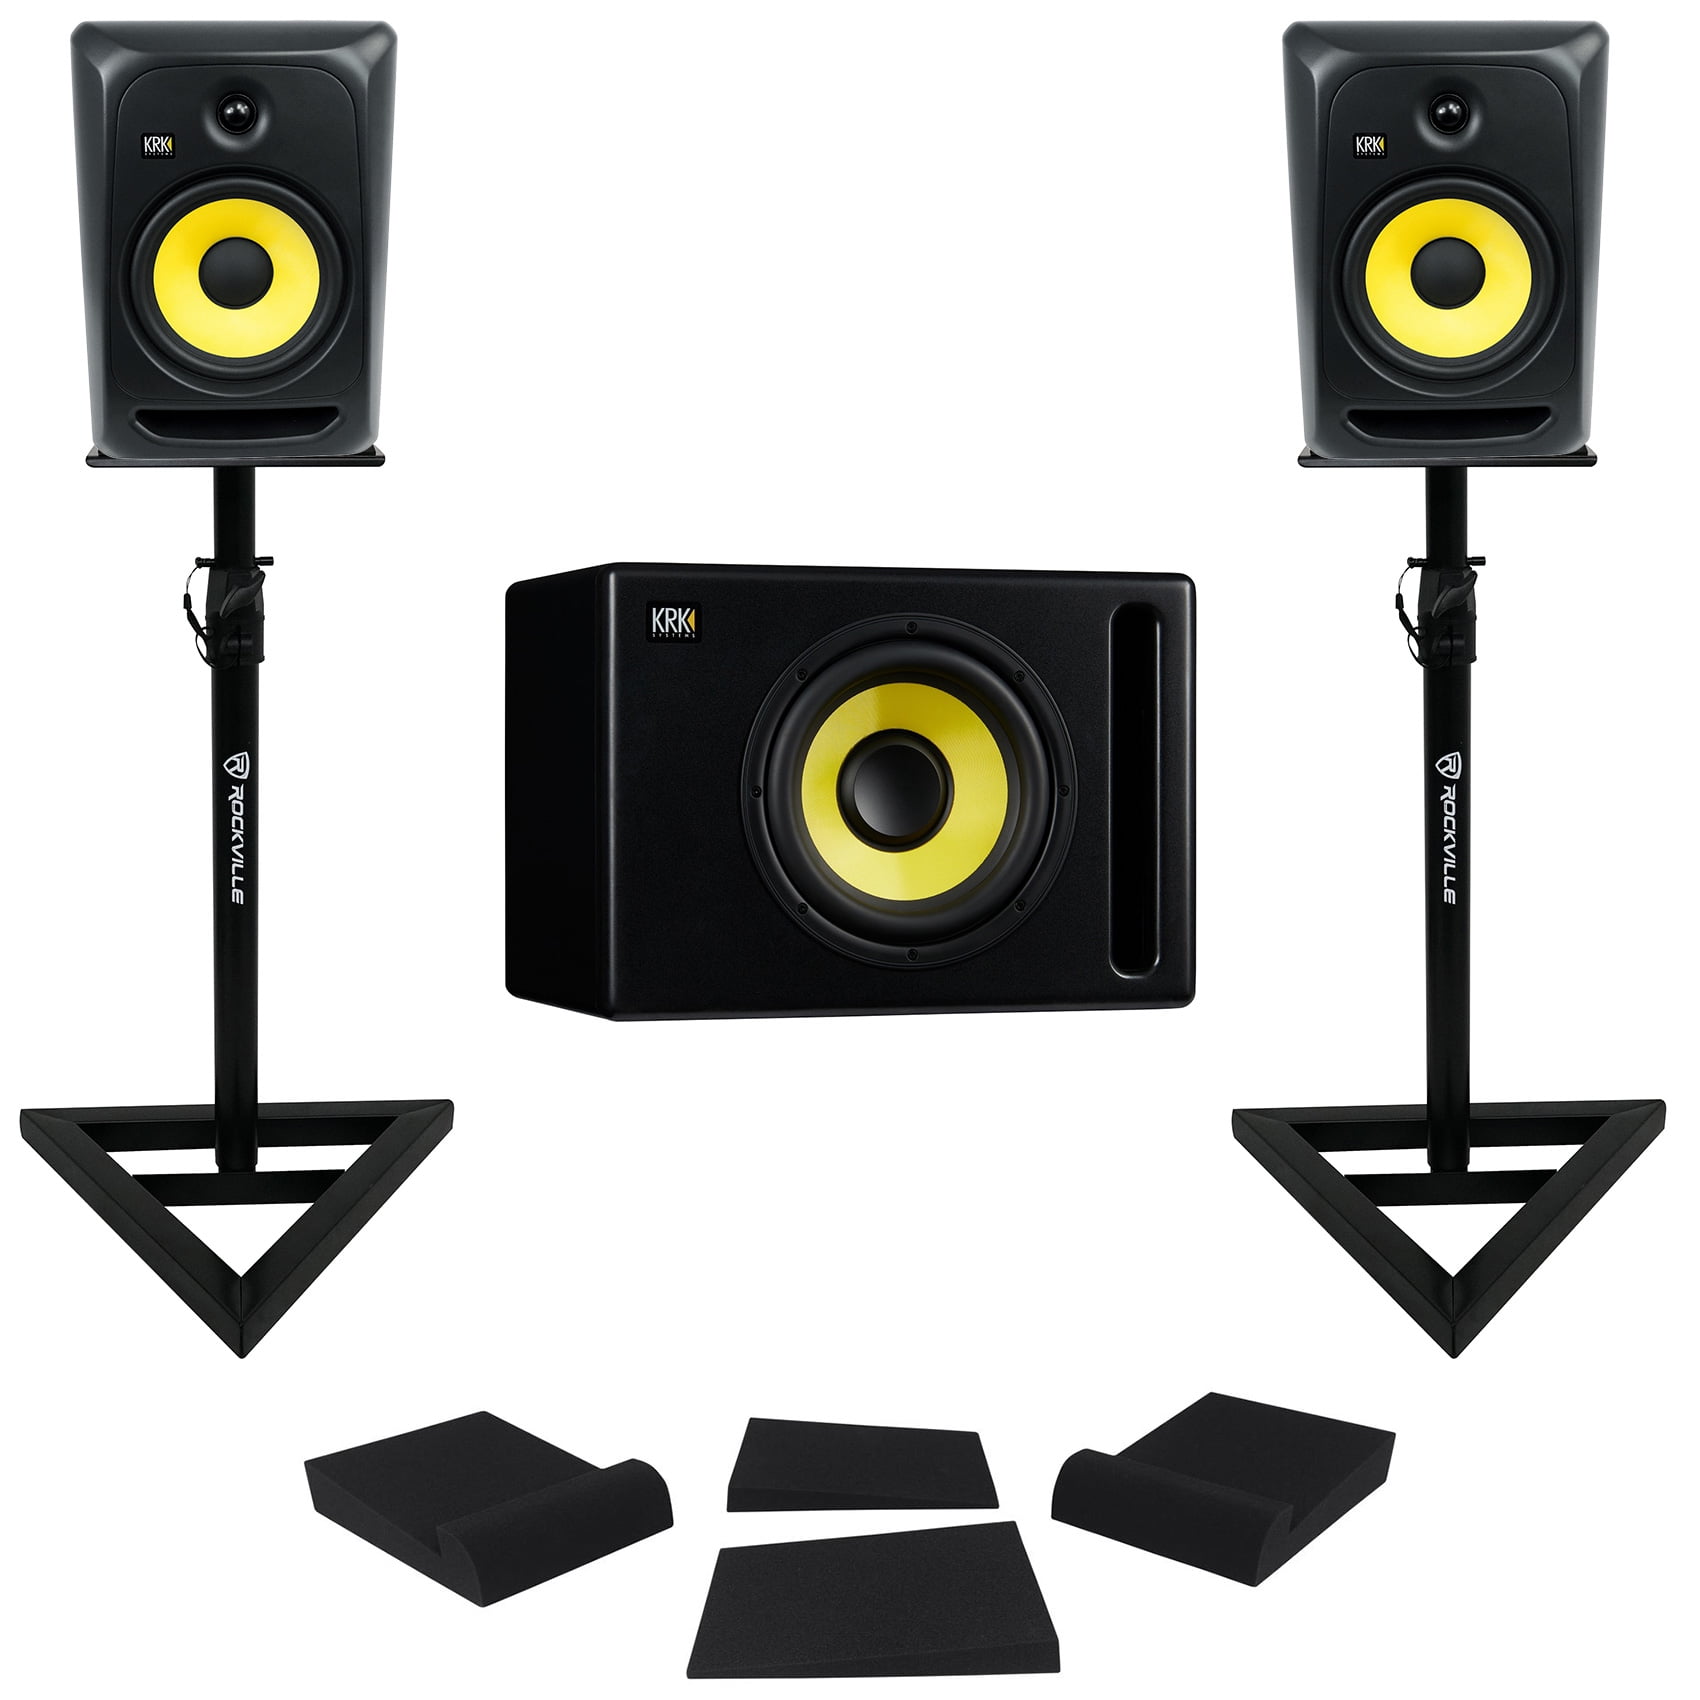 Embankment hierarki Tidlig 2) KRK CL8G3 CLASSIC Studio Monitors 8" Powered Speakers+Stands+Pads+ Subwoofer - Walmart.com